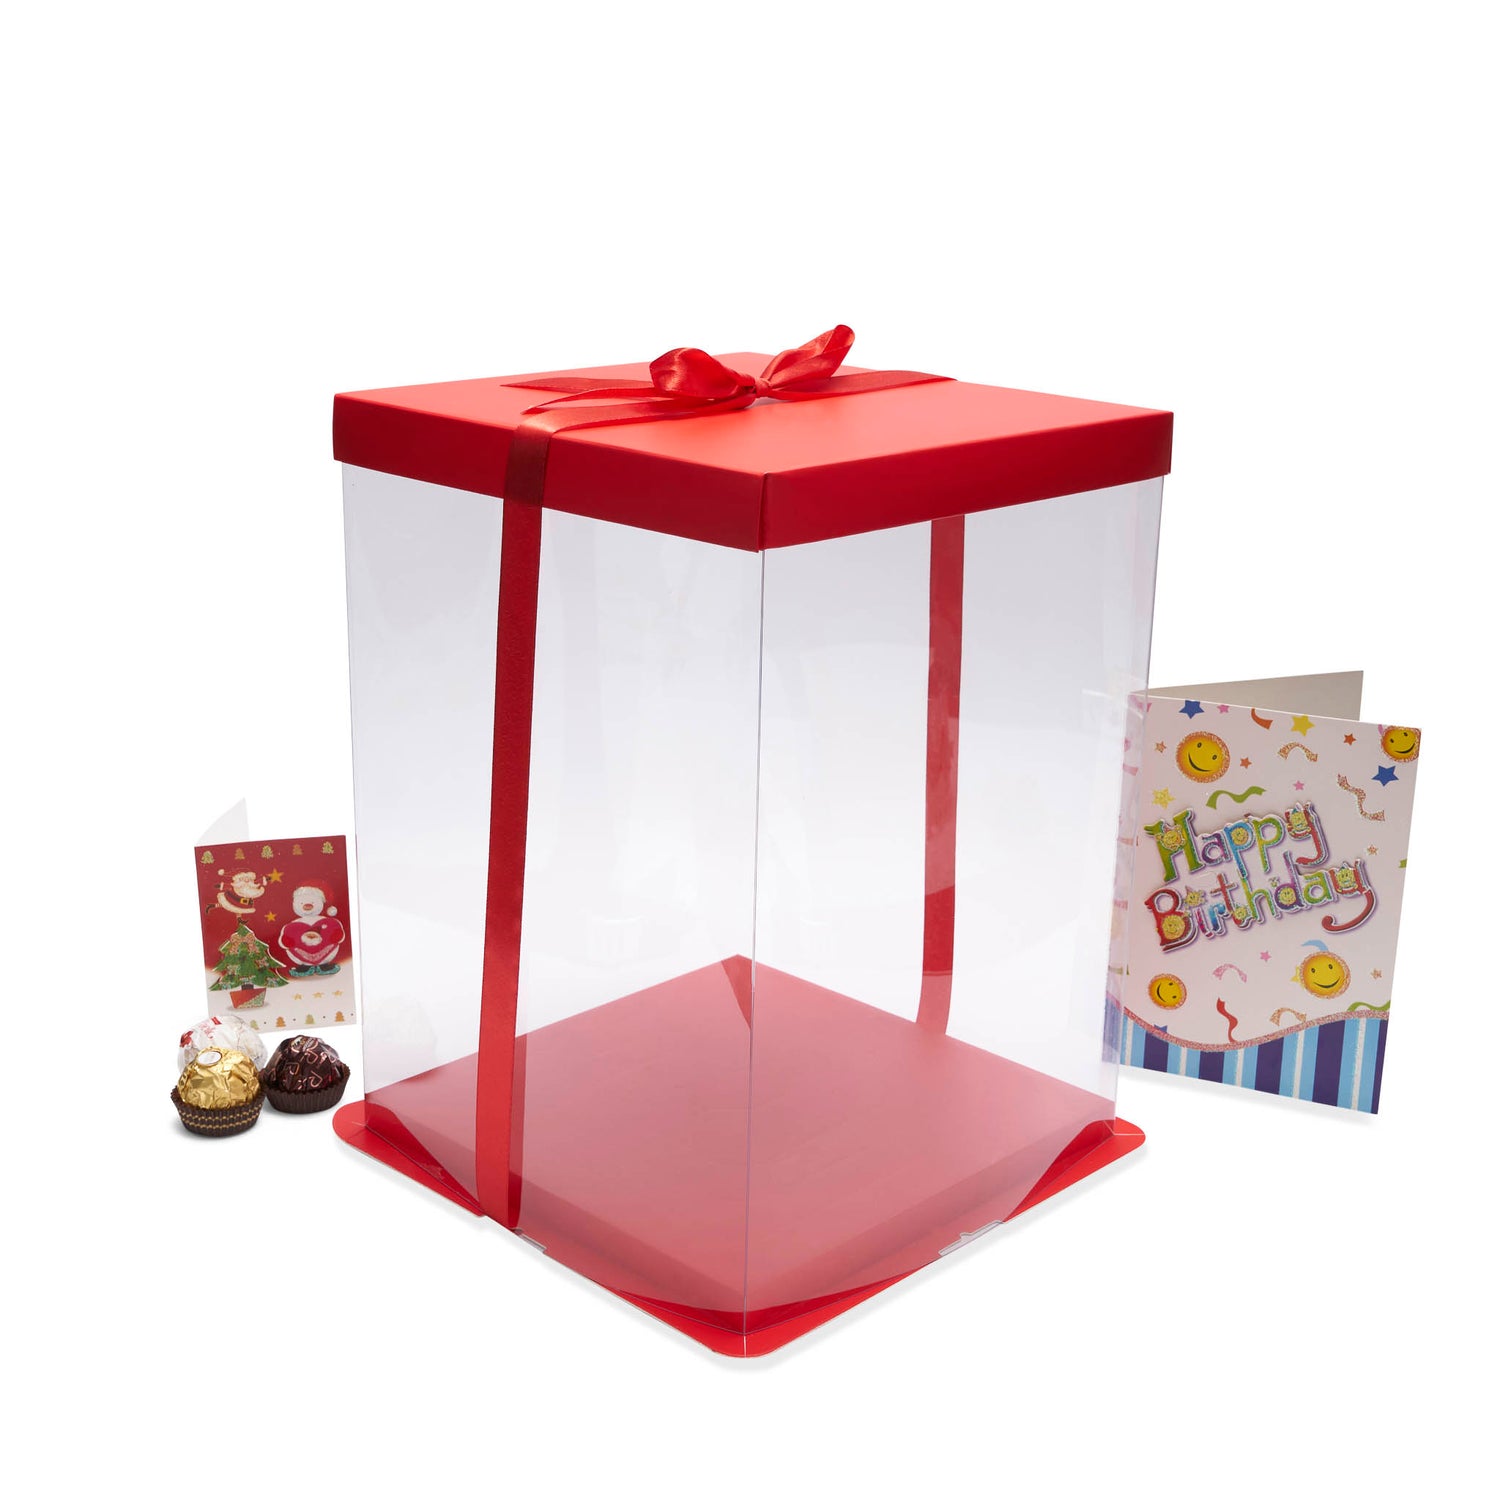 Red Paper Lid Transparent Square Cake Box